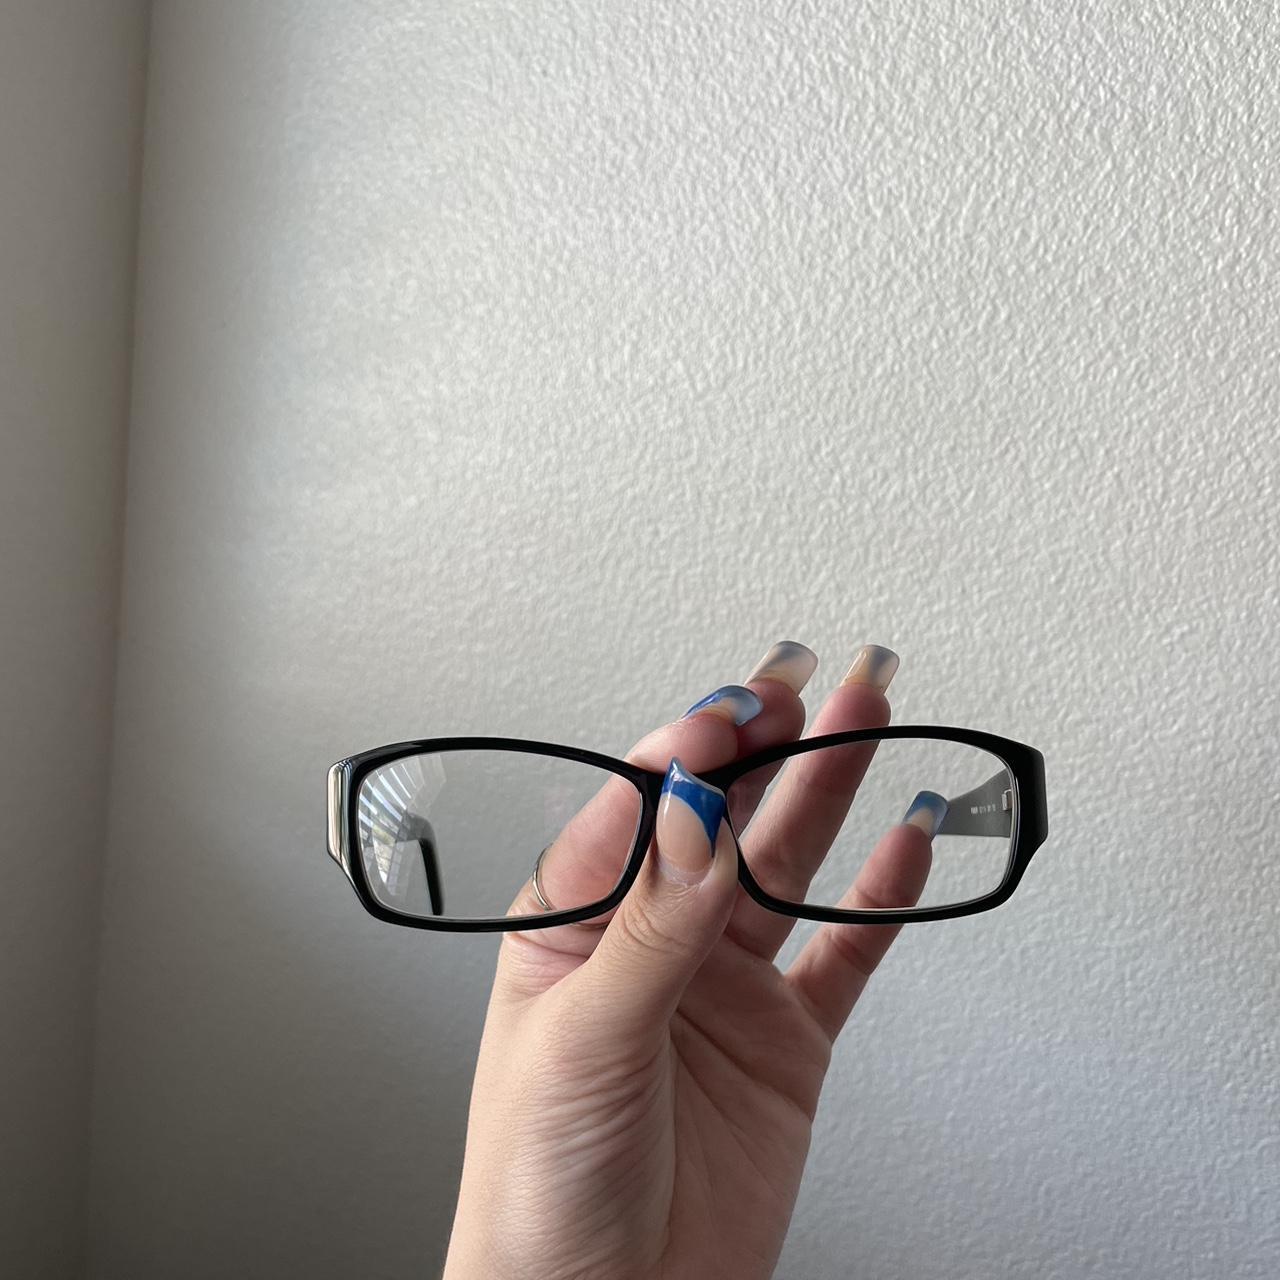 Fendi eye glasses, can change out the prescription lens - Depop